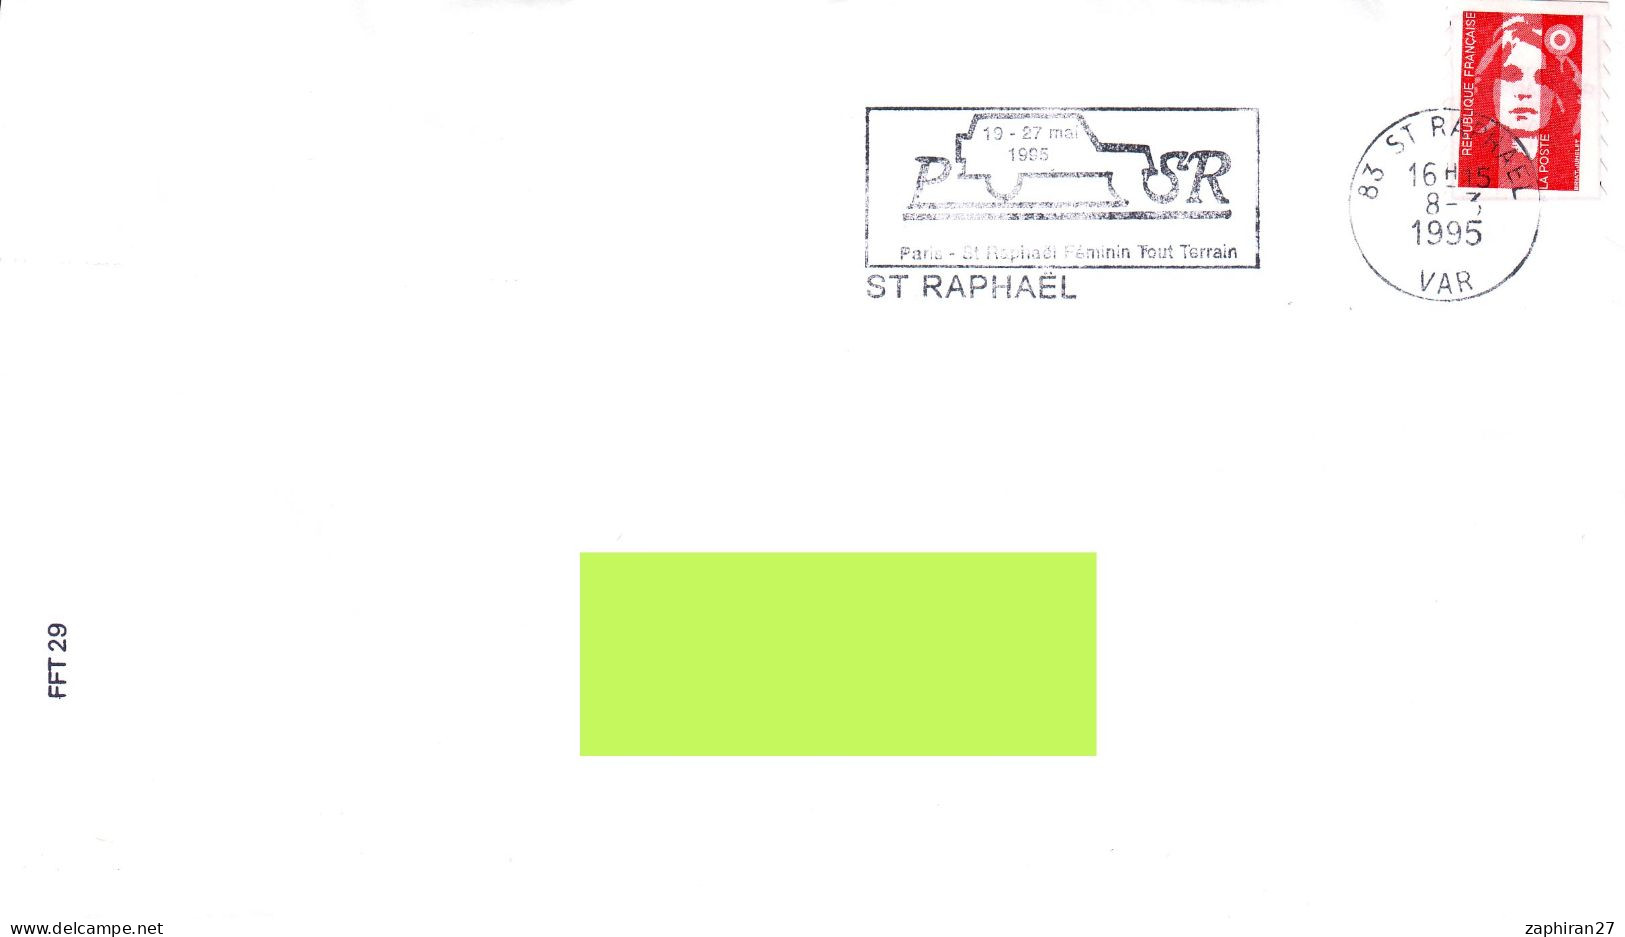 83 FLAMME ST RAPHAEL (VAR) PARIS ST RAPHAEL / FEMININ TOUT TERRAIN 19-27 Mai 1995  #988# - Automobile